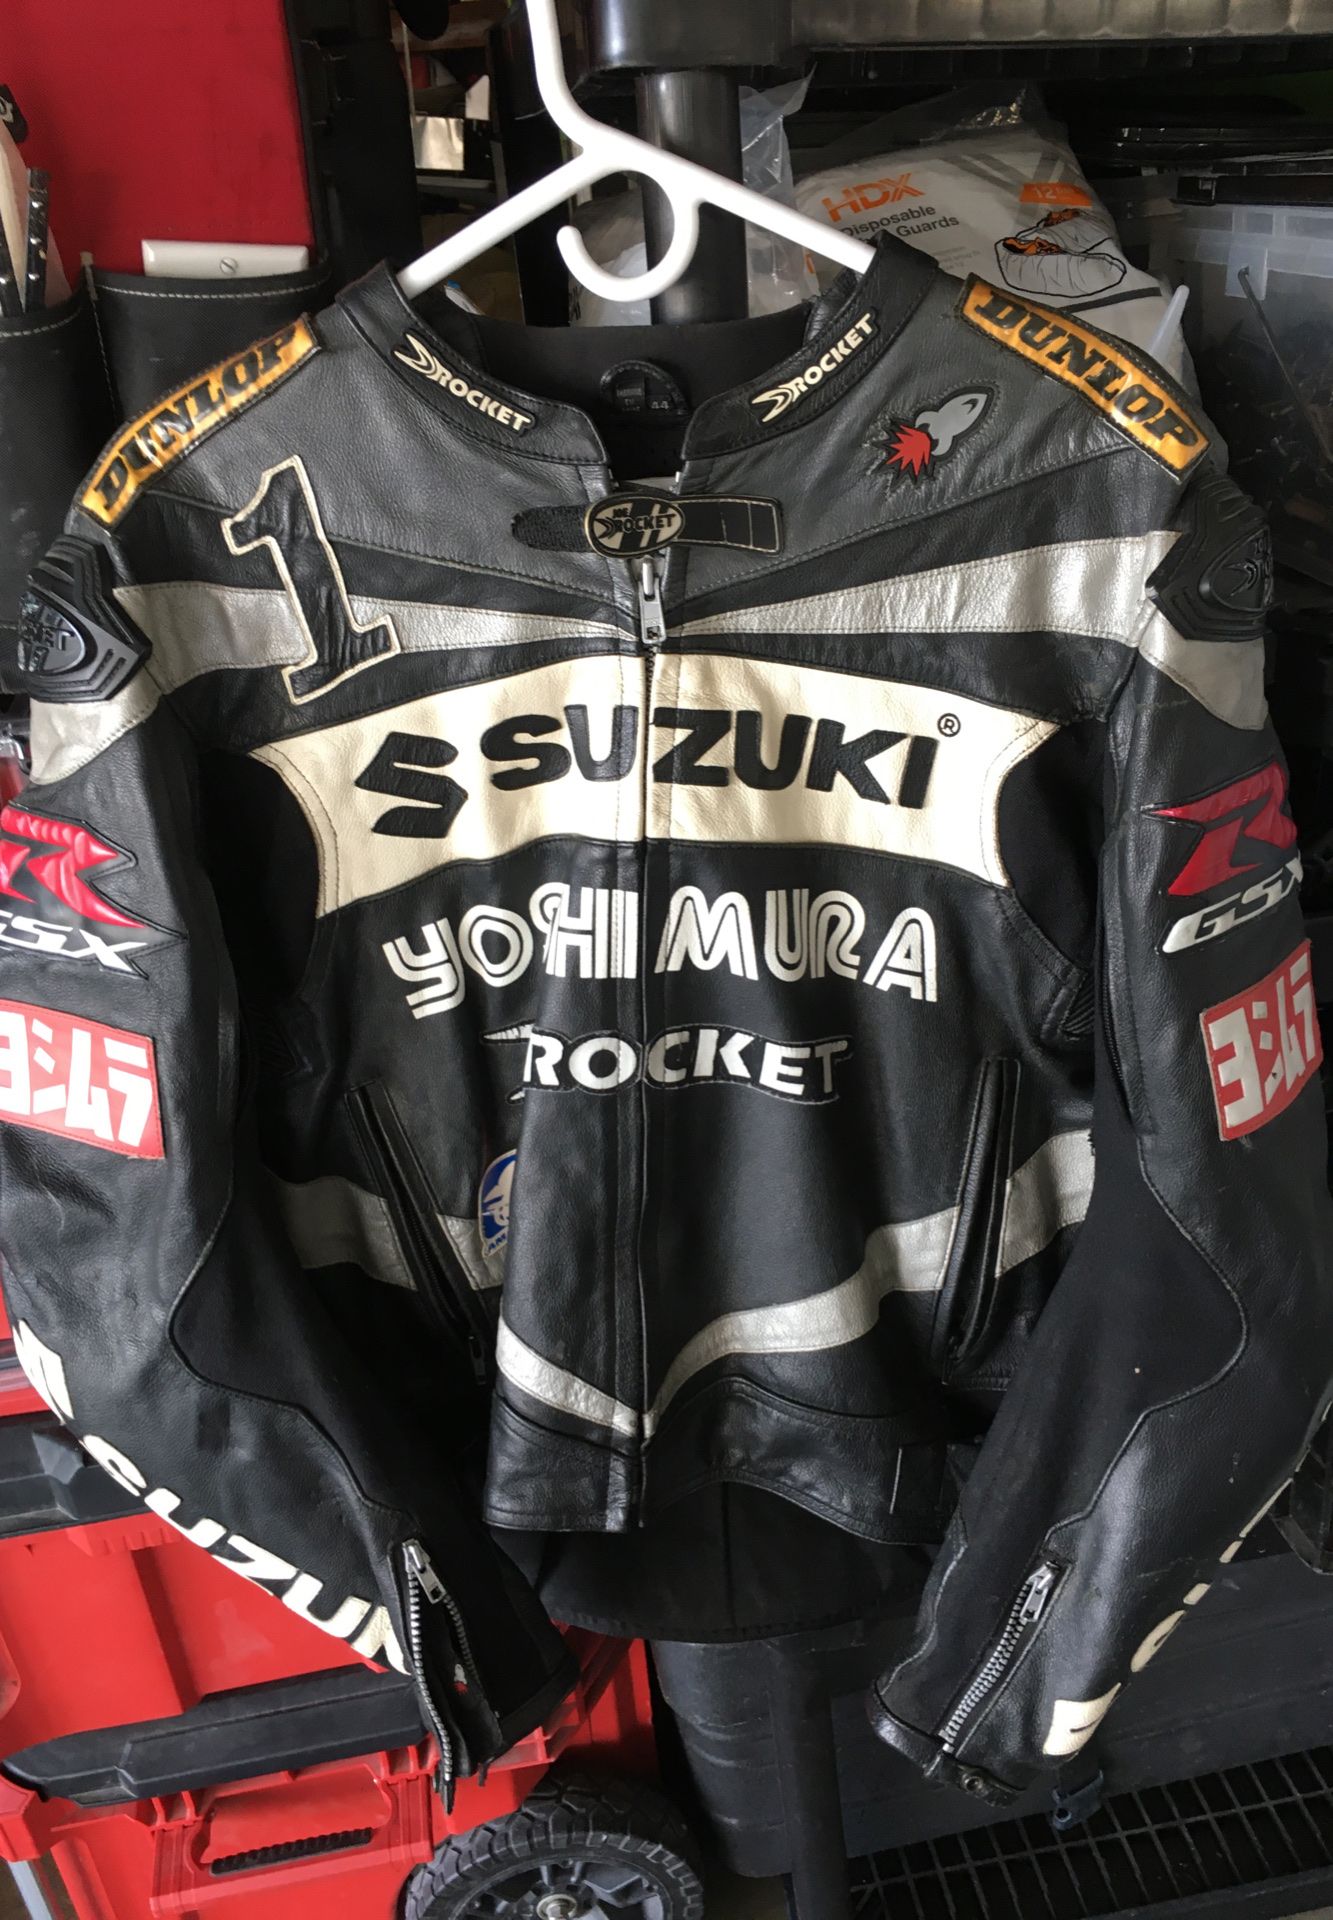 Suzuki rocket Motorcycle jacket